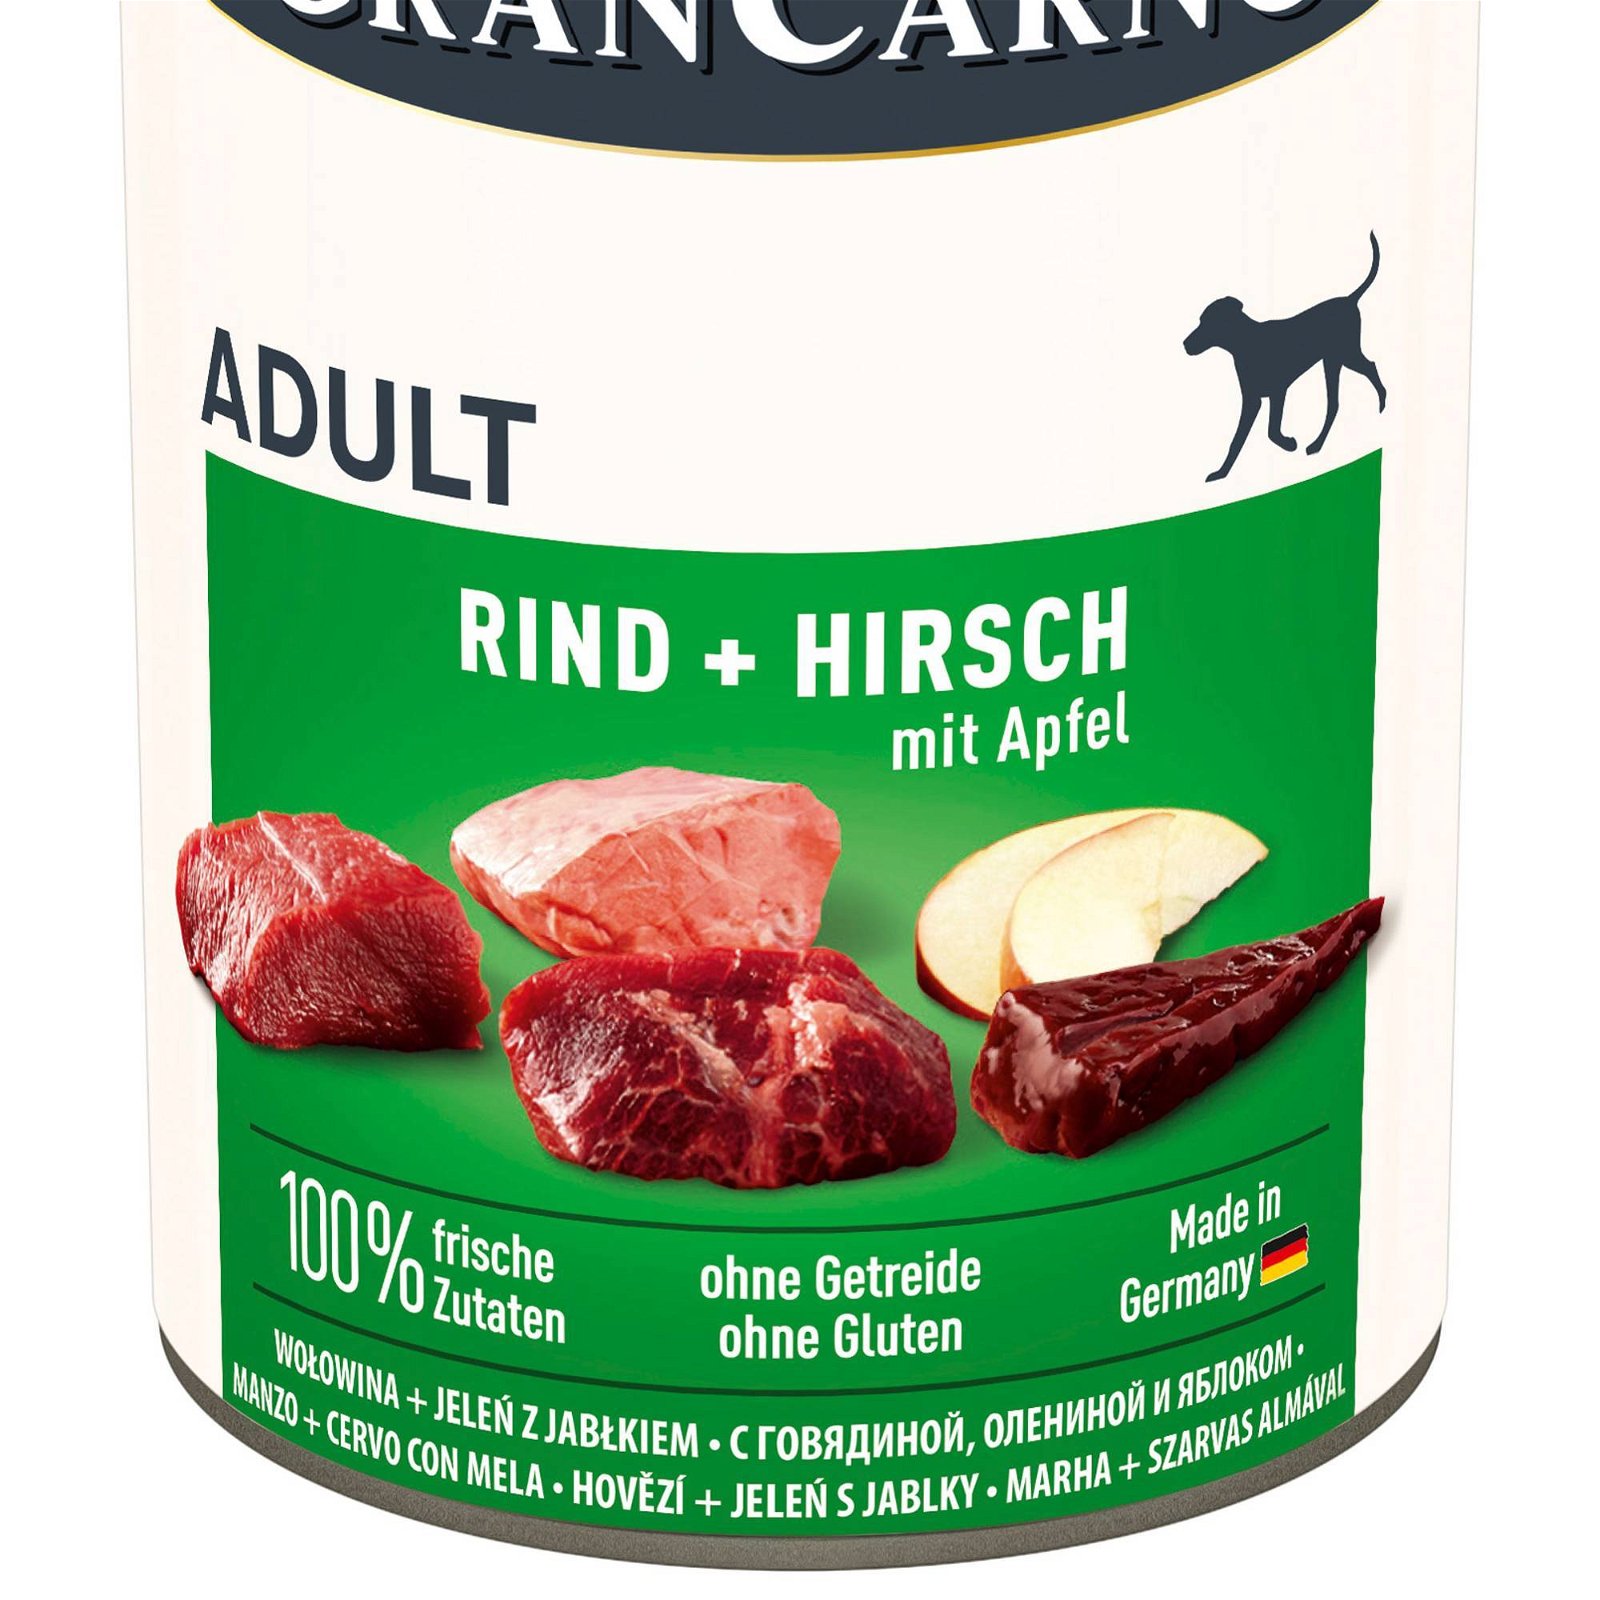 Hundefutter 'Animonda Cran Carno ® Adult', Rind, Hirsch & Apfel